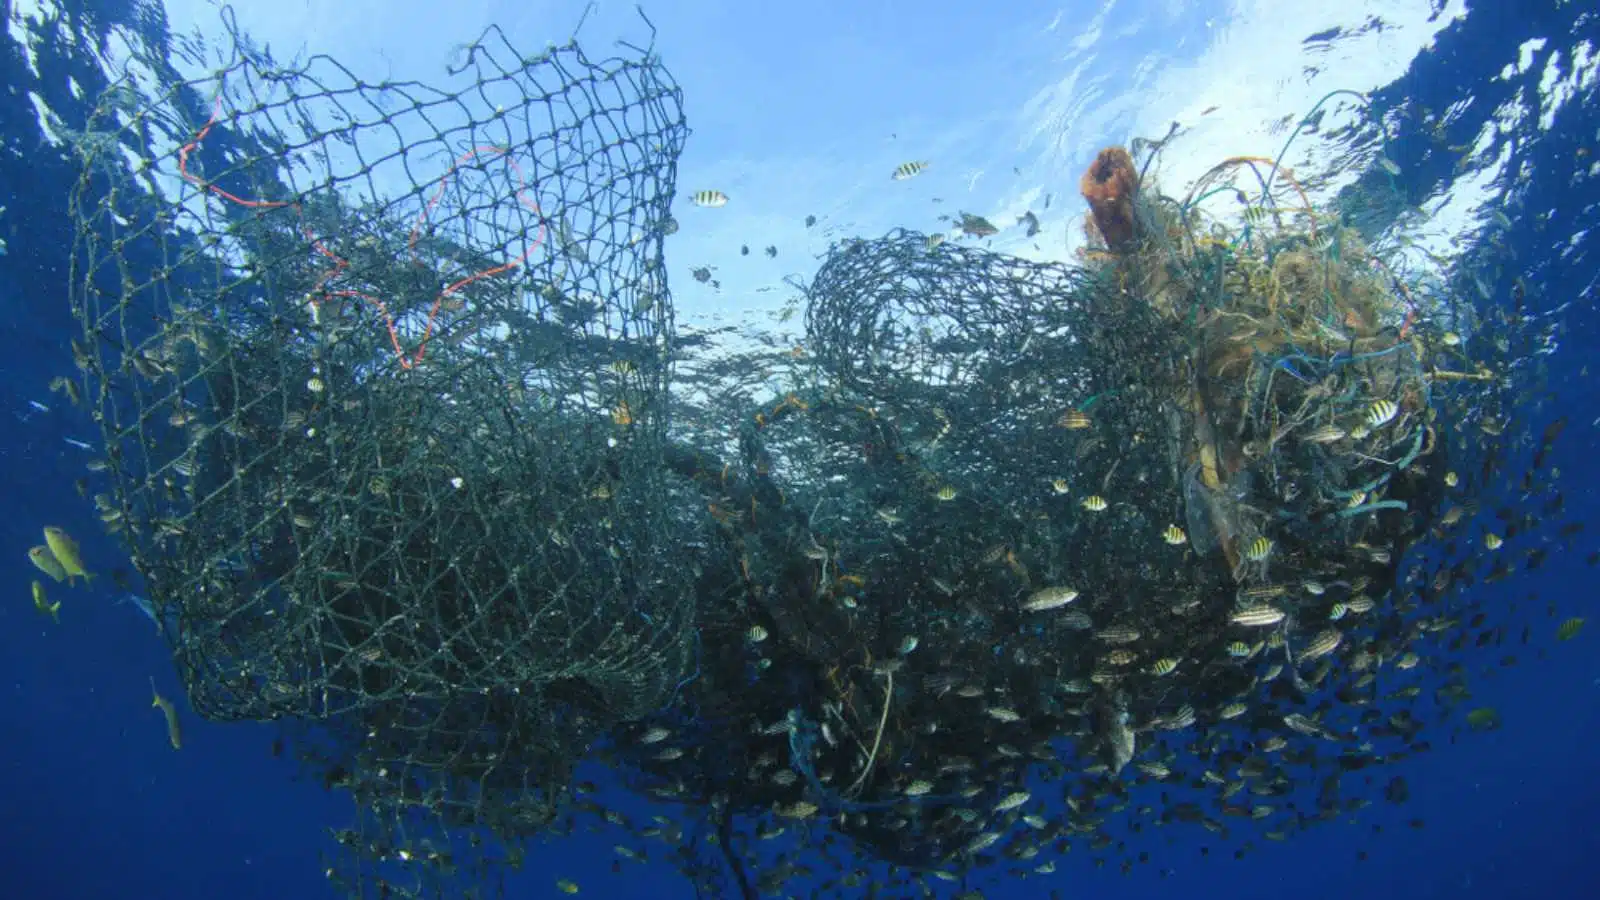 Abandoned fishing net. Ghost net environmental ocean pollution